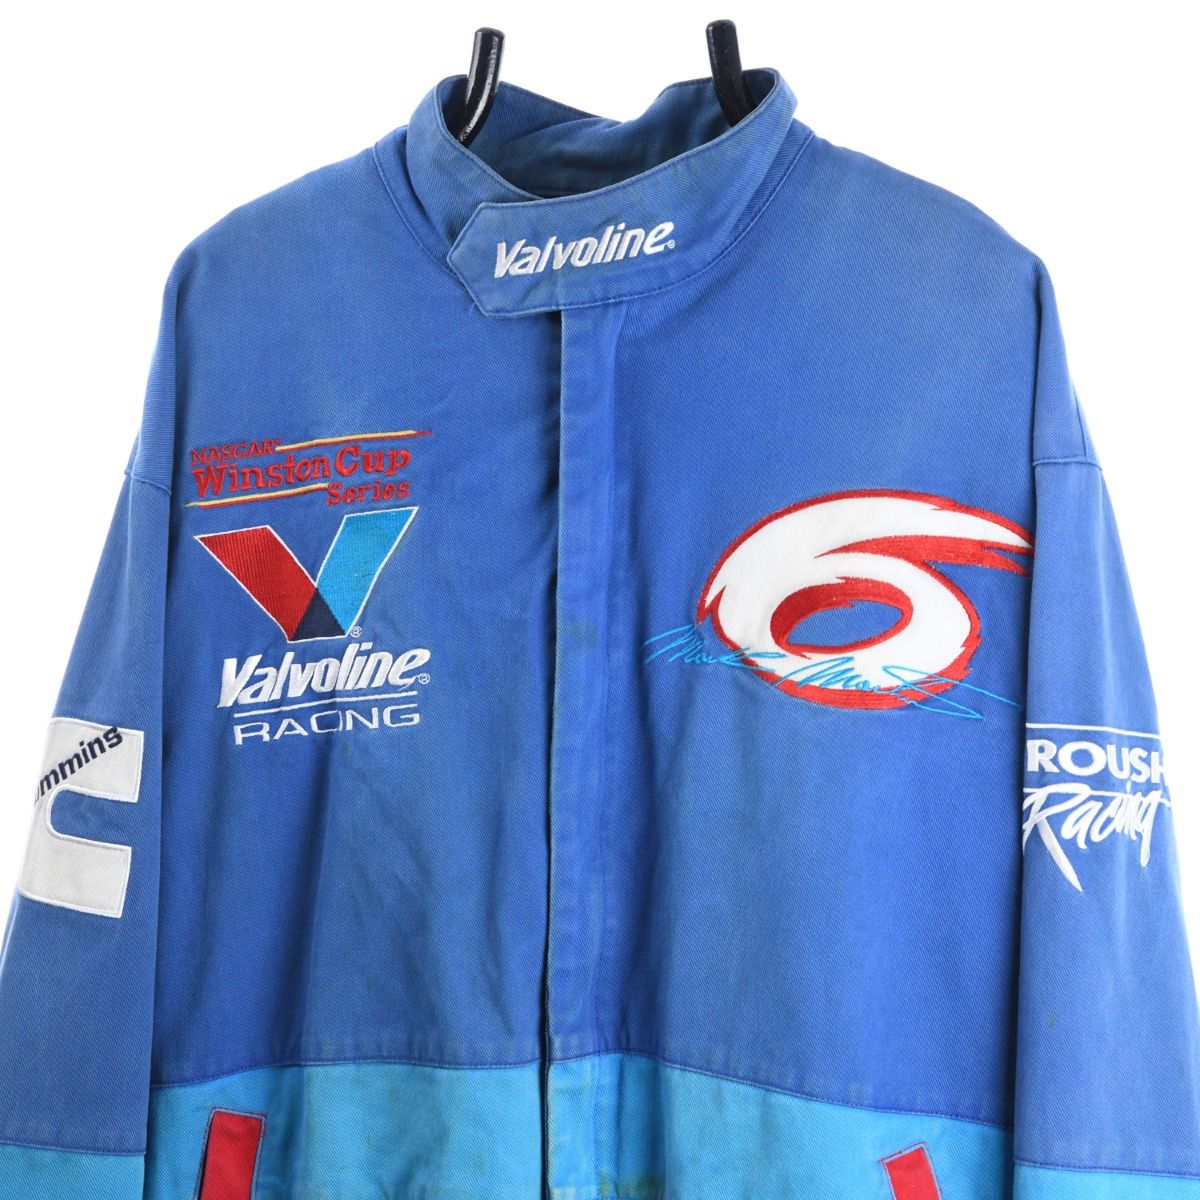 Valvoline NASCAR Racing Jacket